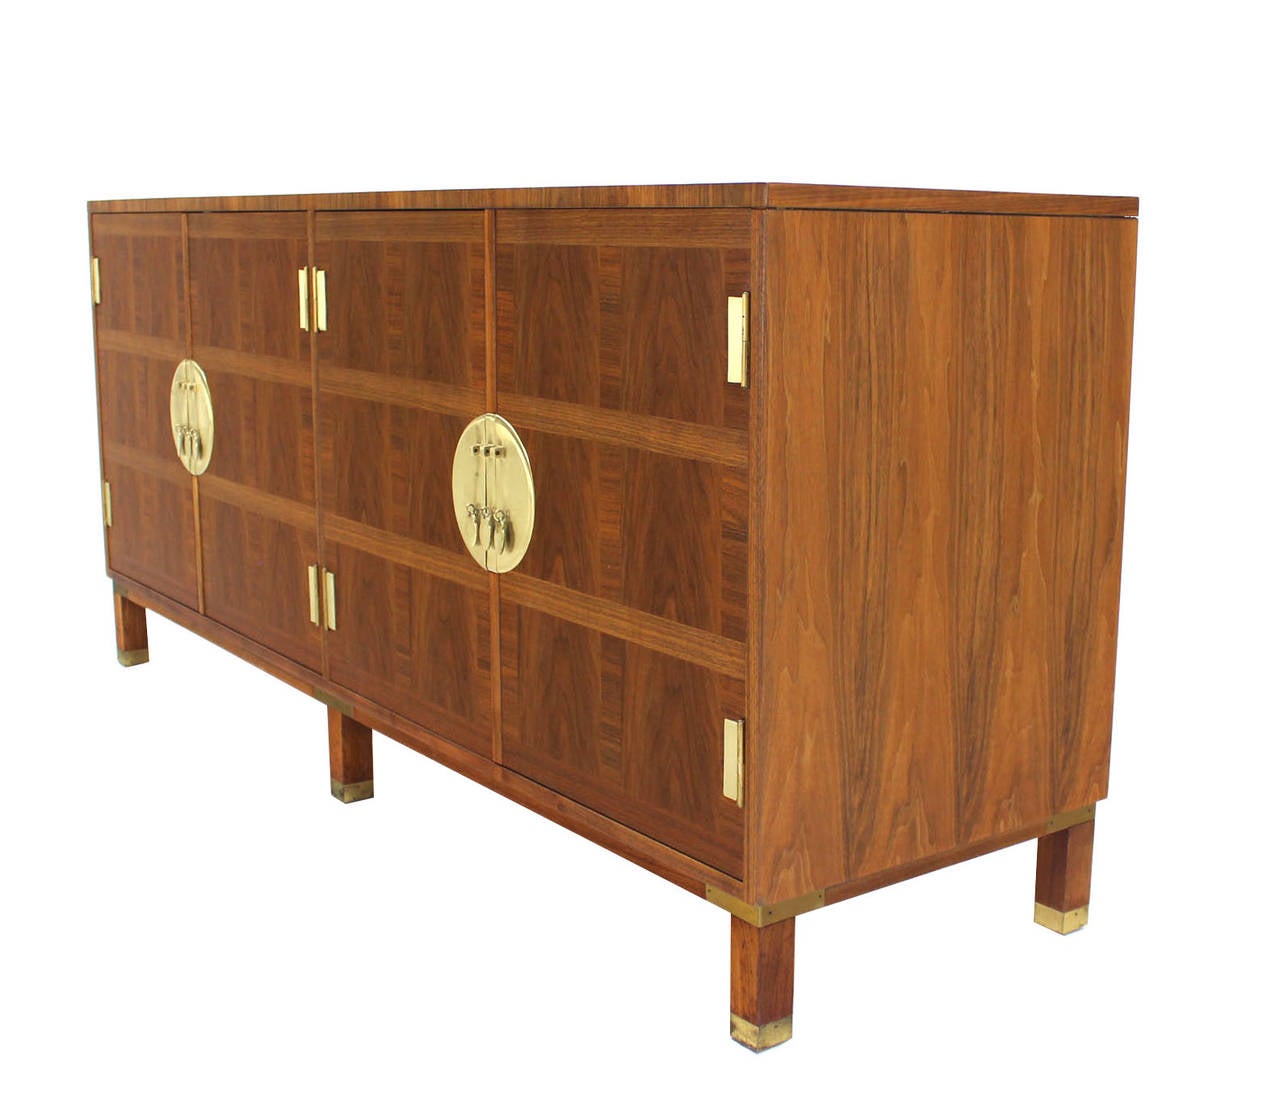 Mid-Century Modern walnut dresser by Baker. Beautiful walnut wood grain and solid brass hardware.
  